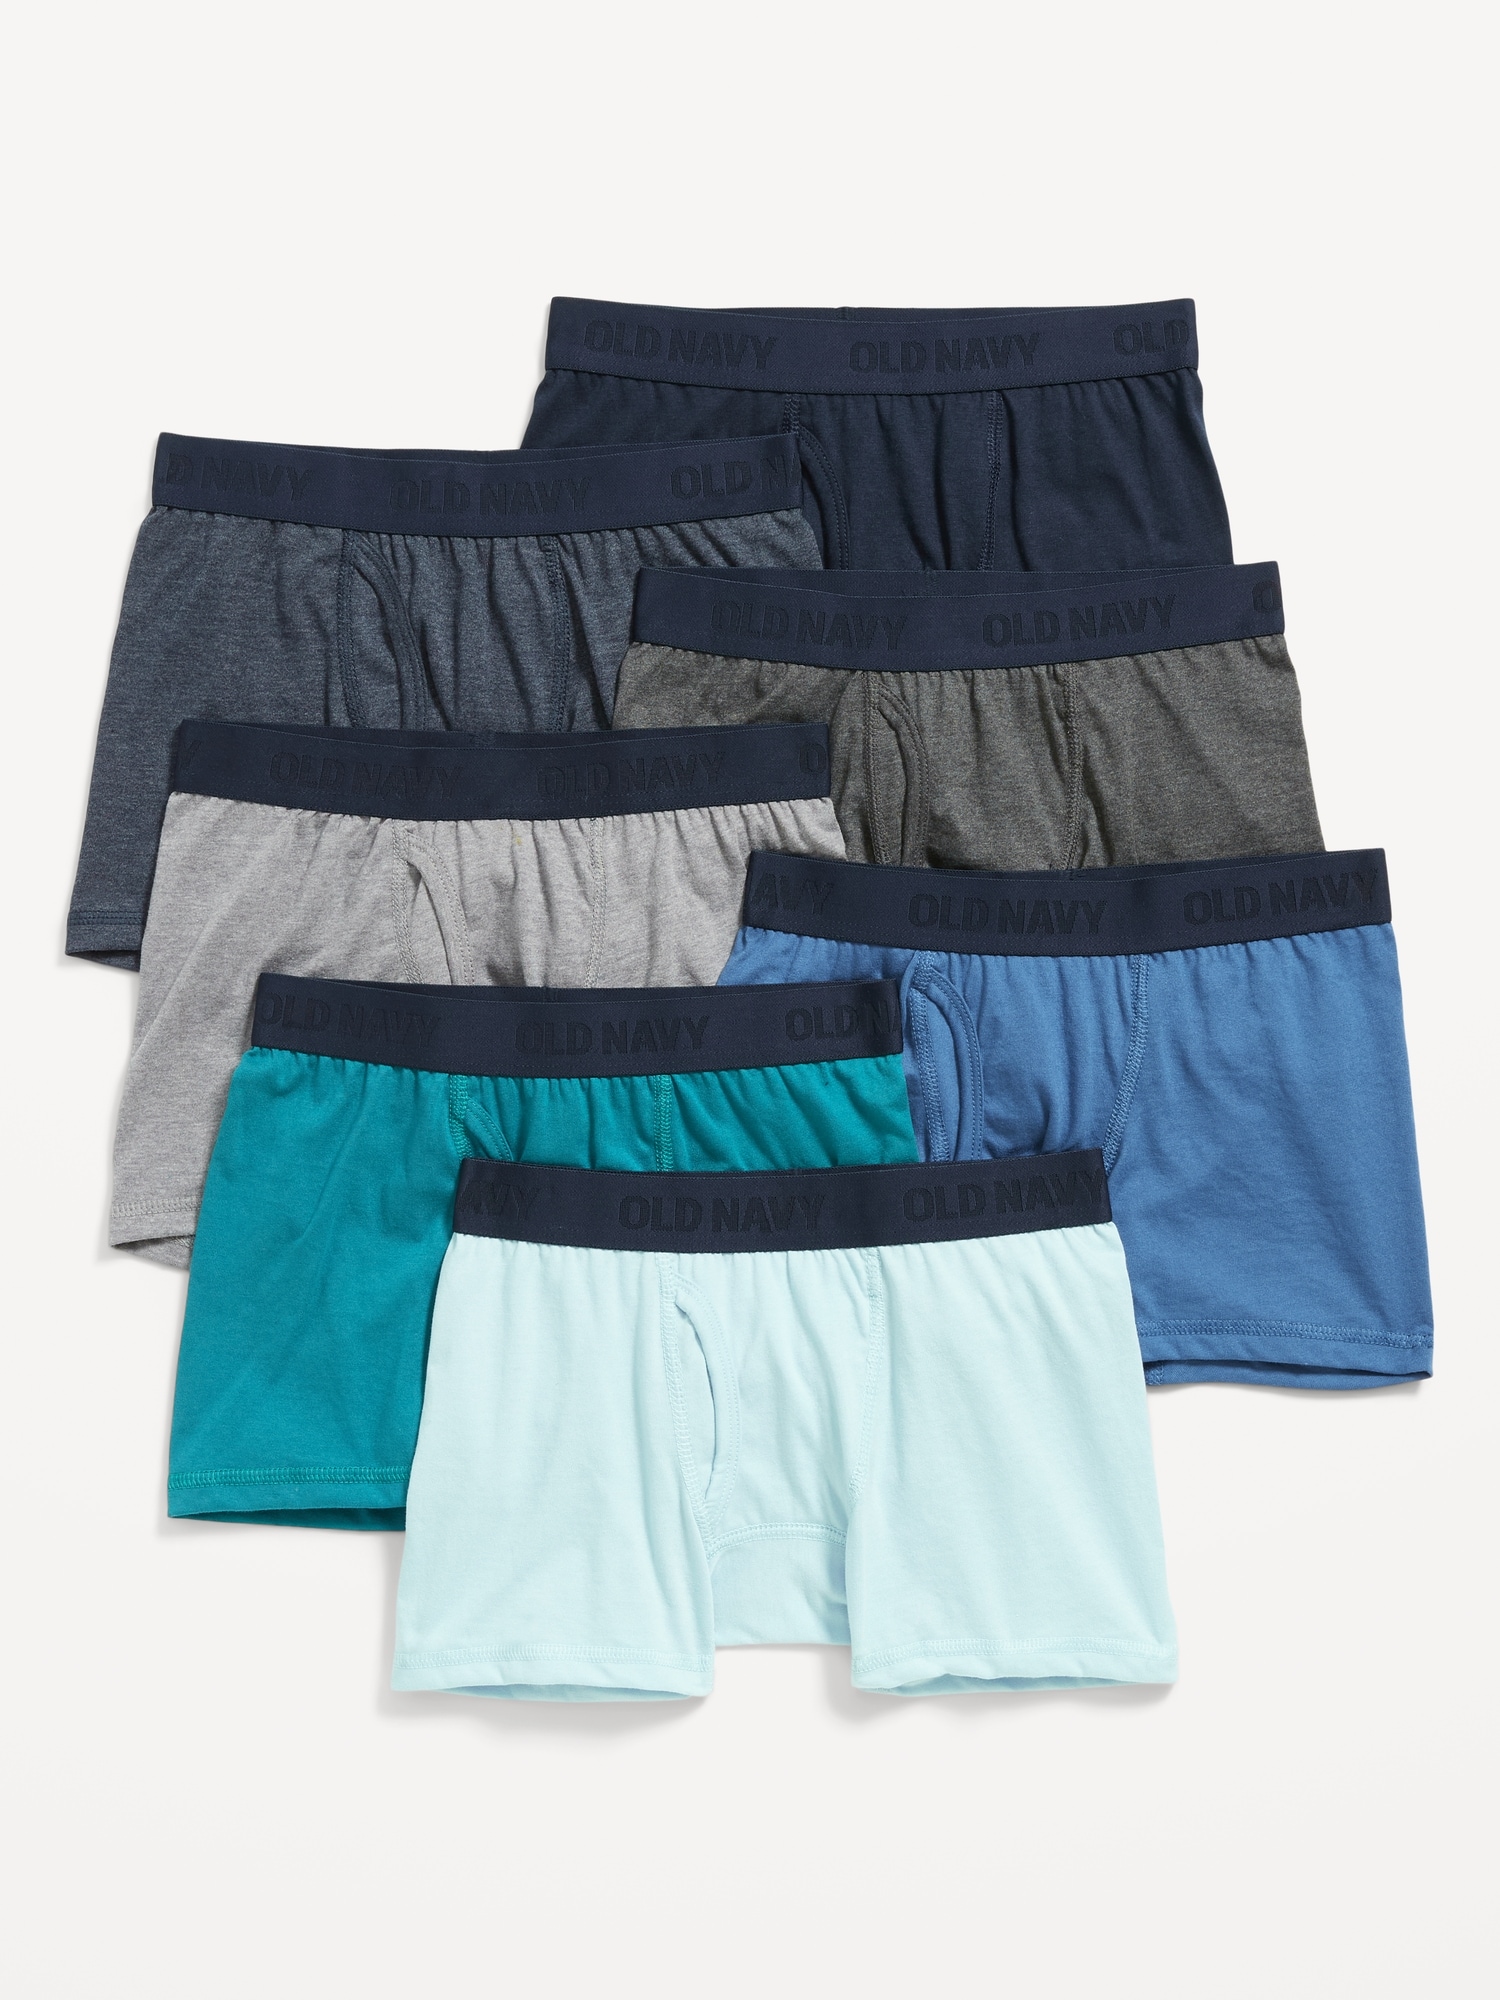 Soft-Washed Built-In Flex Boxer-Brief Underwear 10-Pack for Men